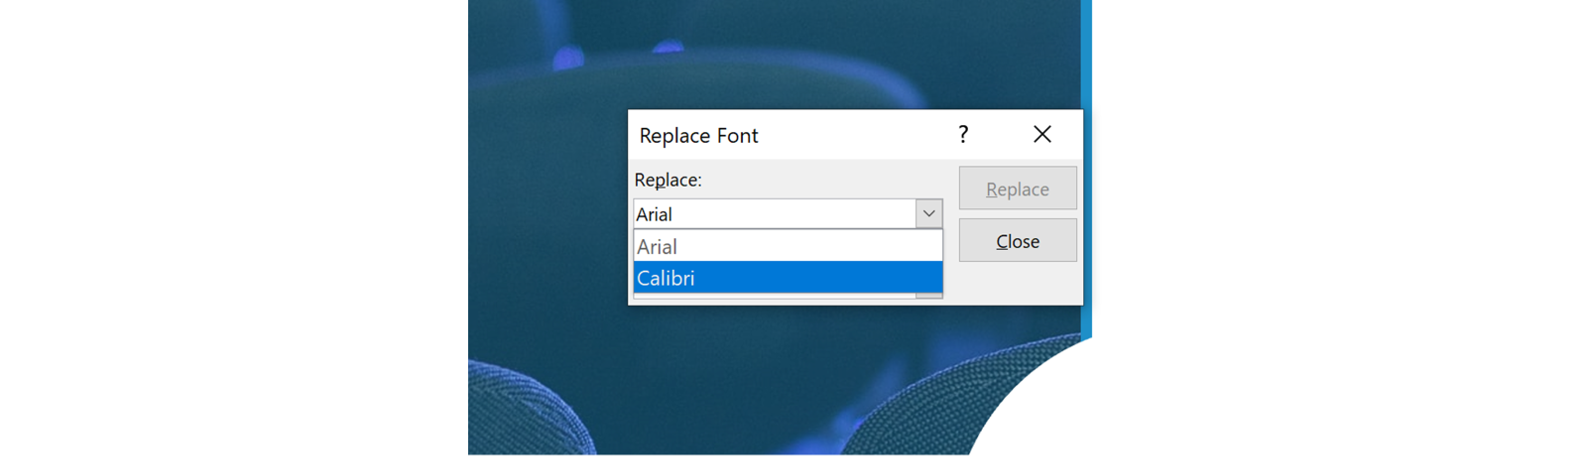 Replace fonts dropdown menu screenshot